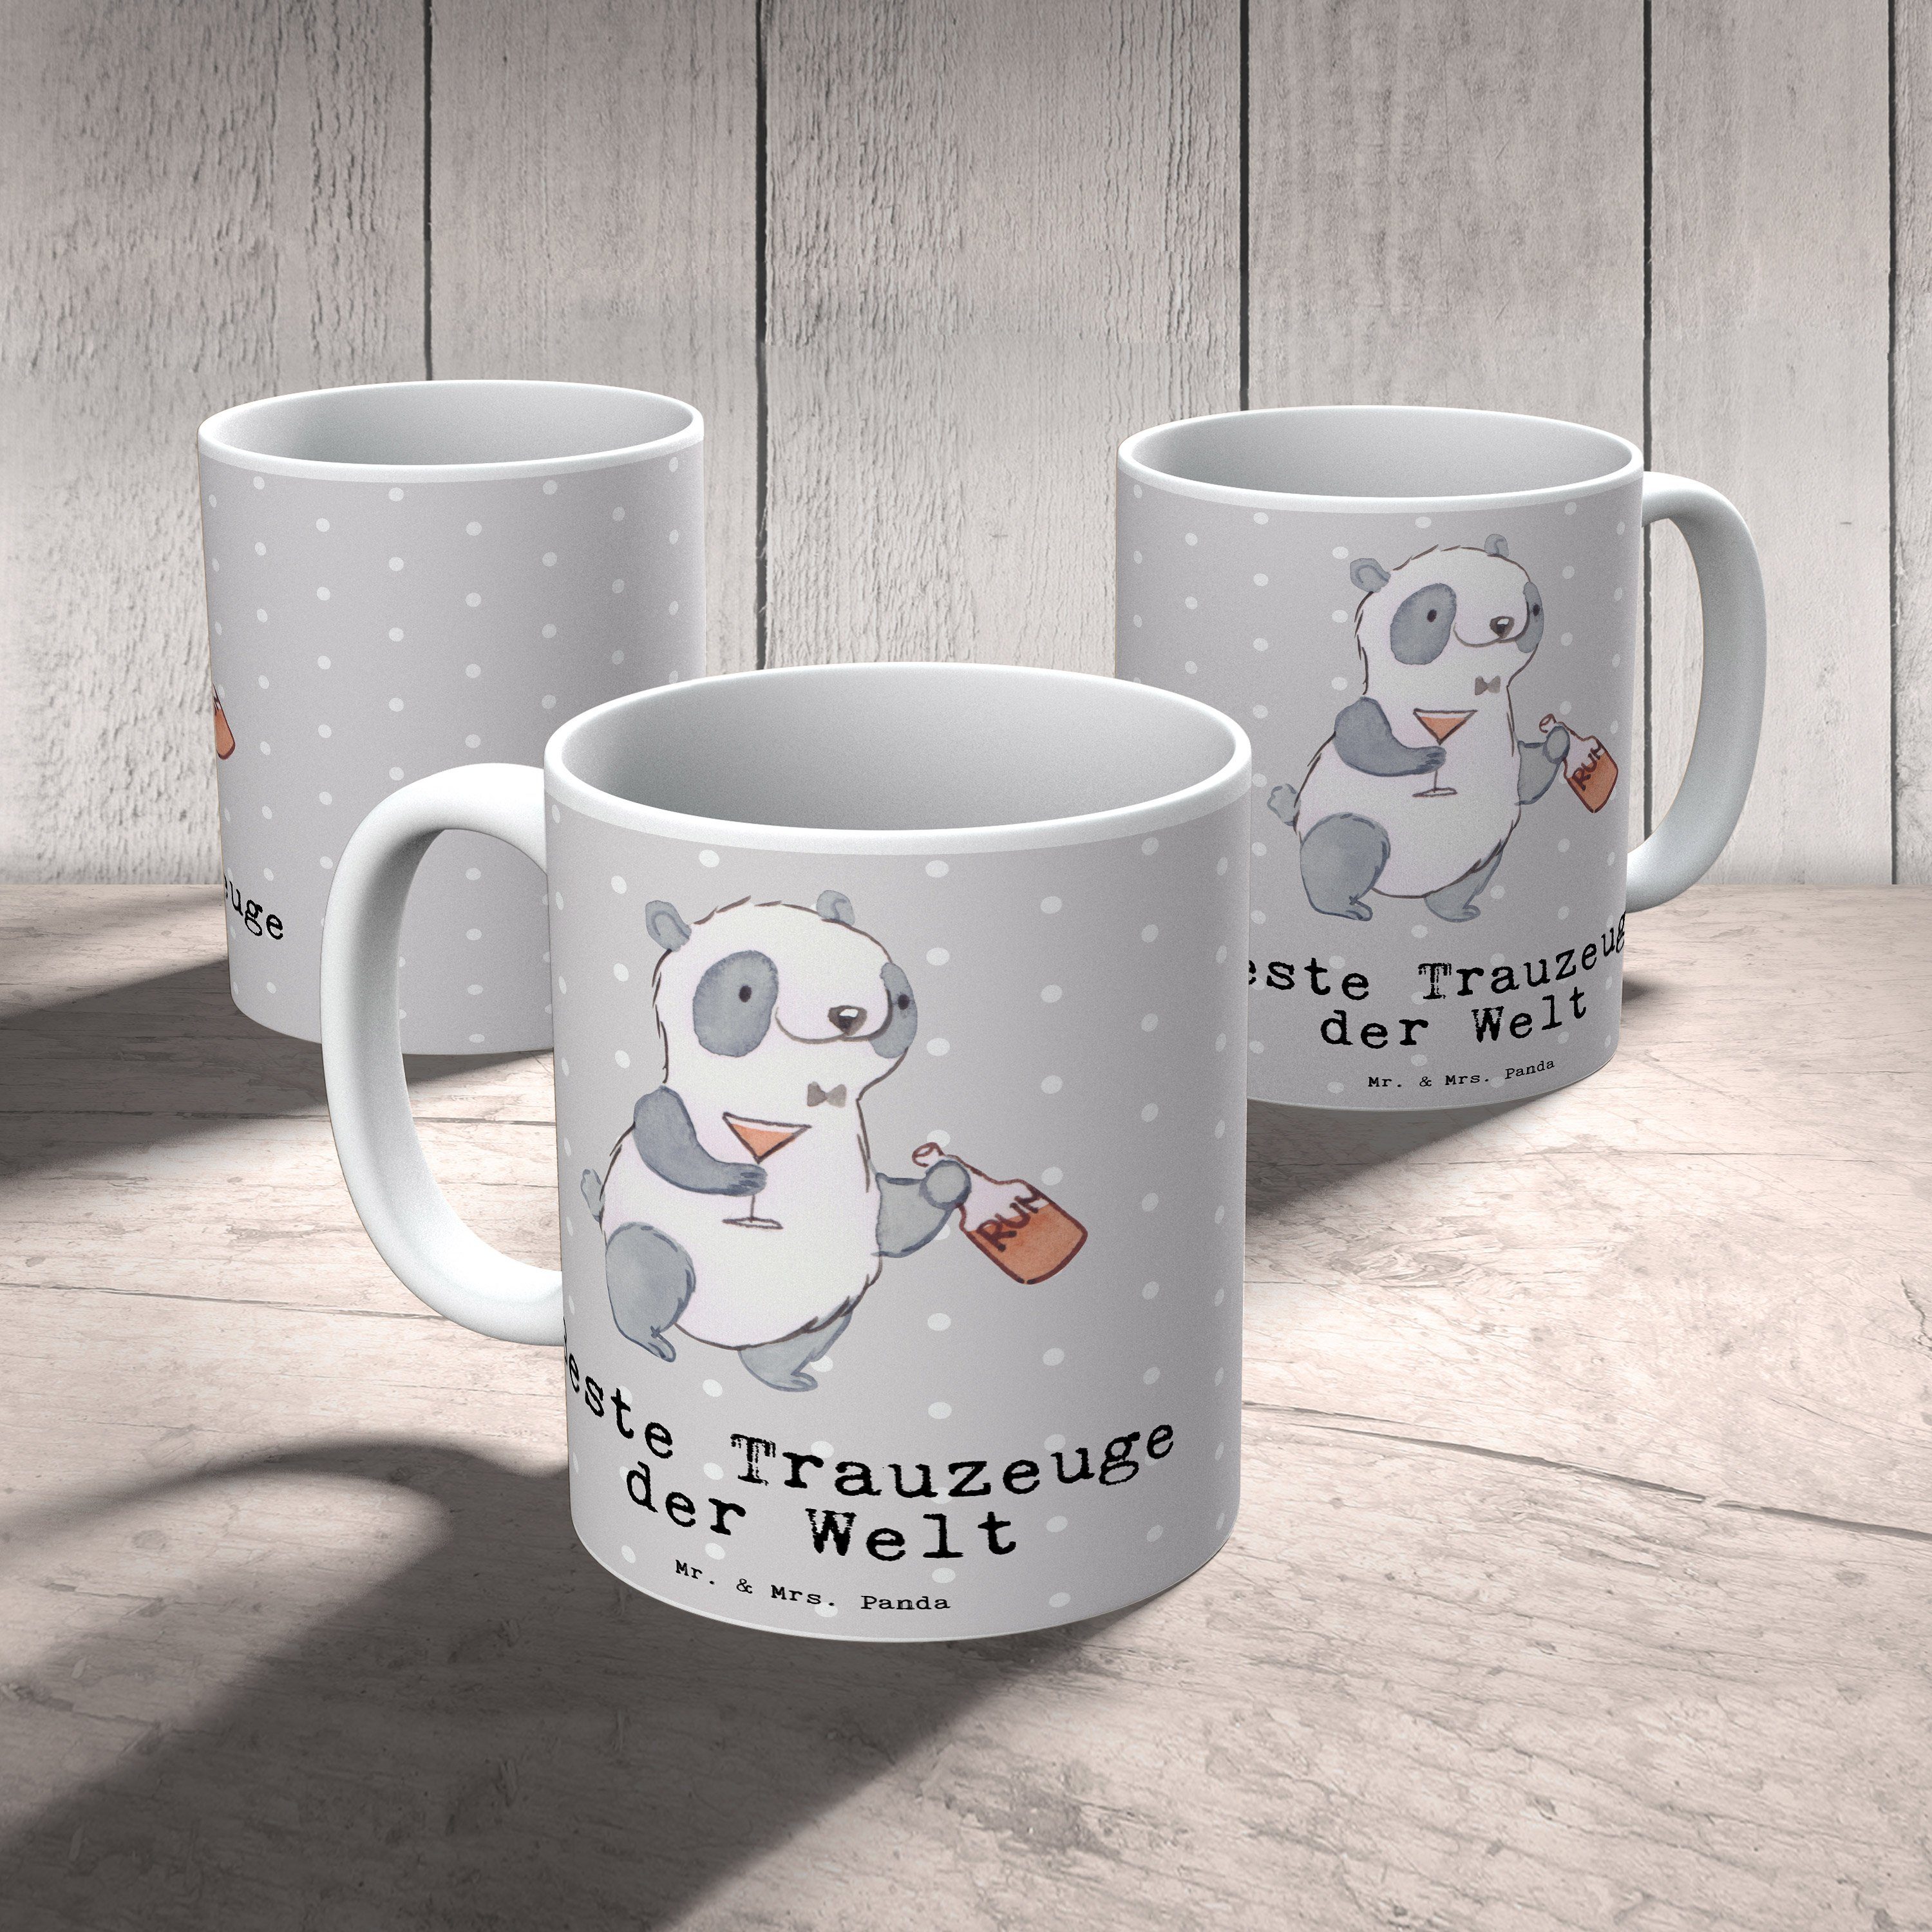 Mrs. Bester Welt Panda T, Tasse Panda Keramik - Geschenk Mr. Geschenk, Pastell der & - Grau Trauzeuge